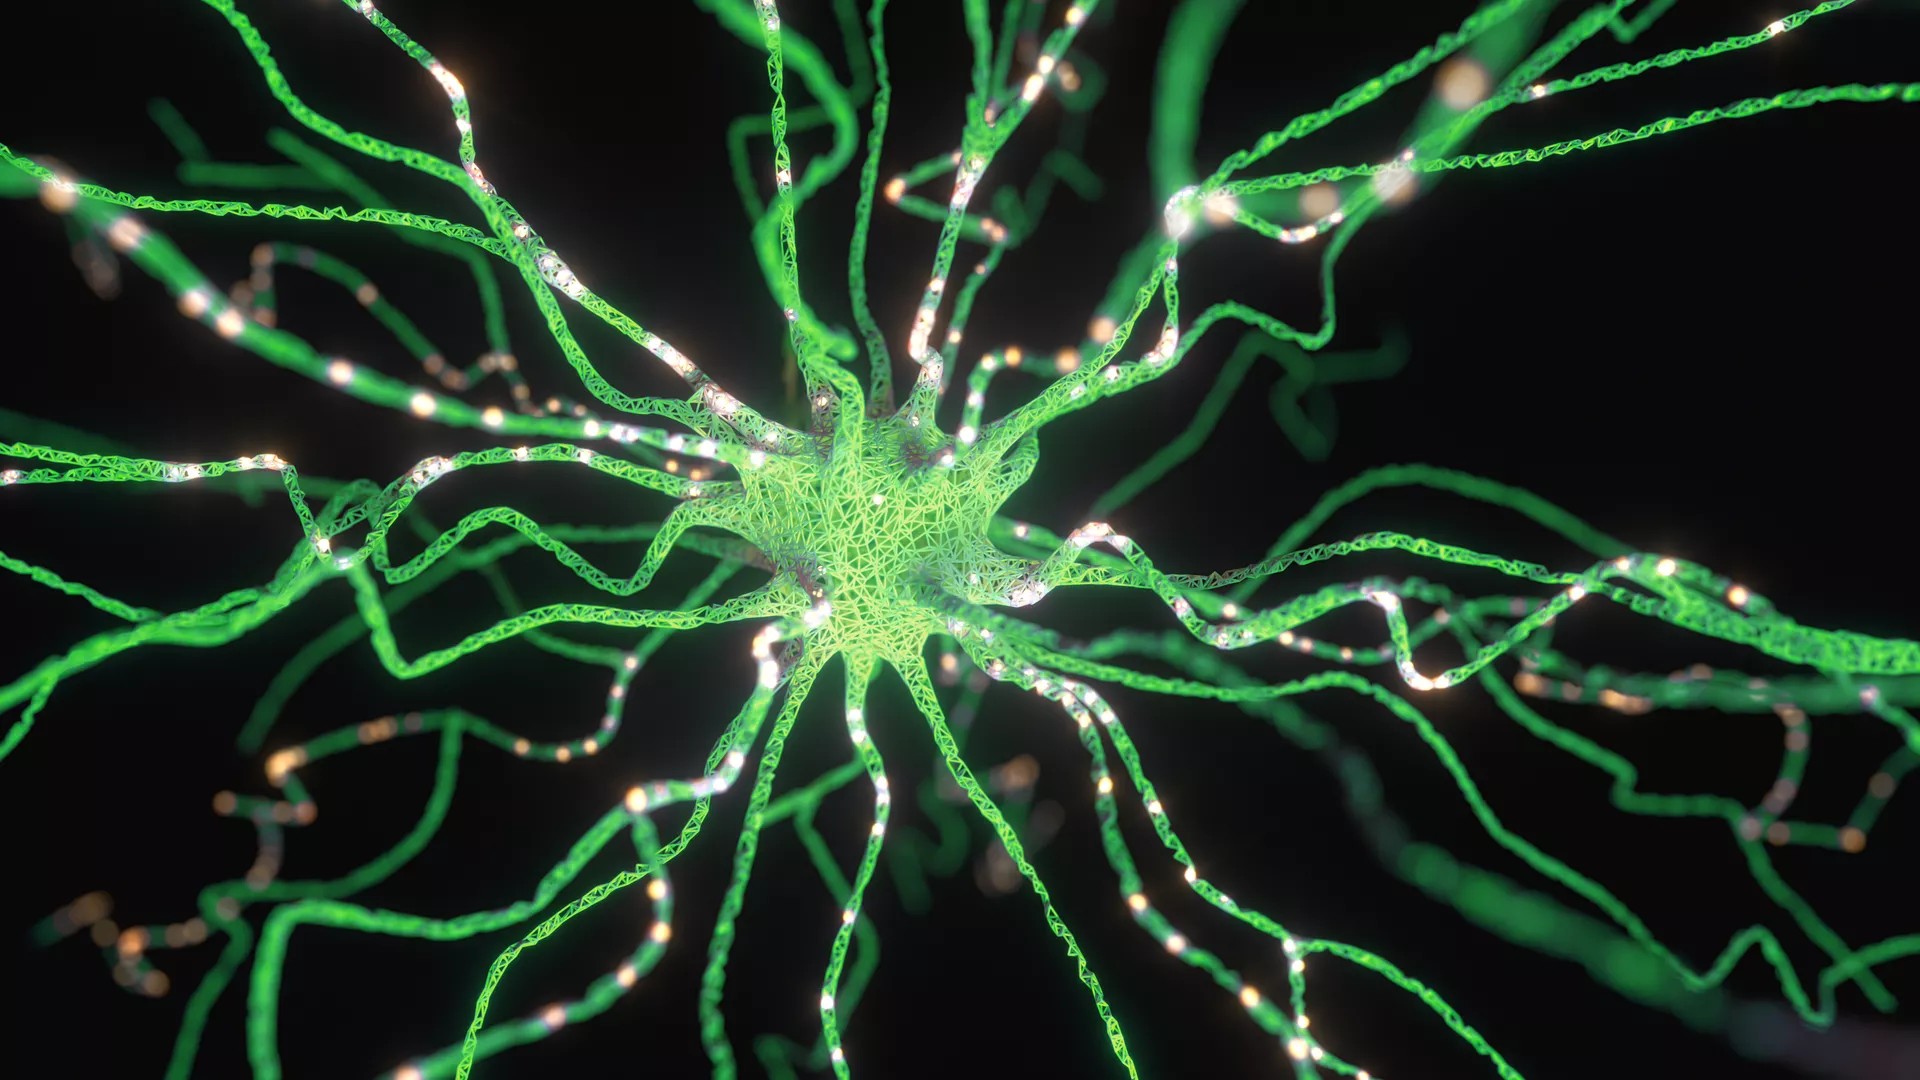 Cover image for "Neurorobotics explores the Human Senses"